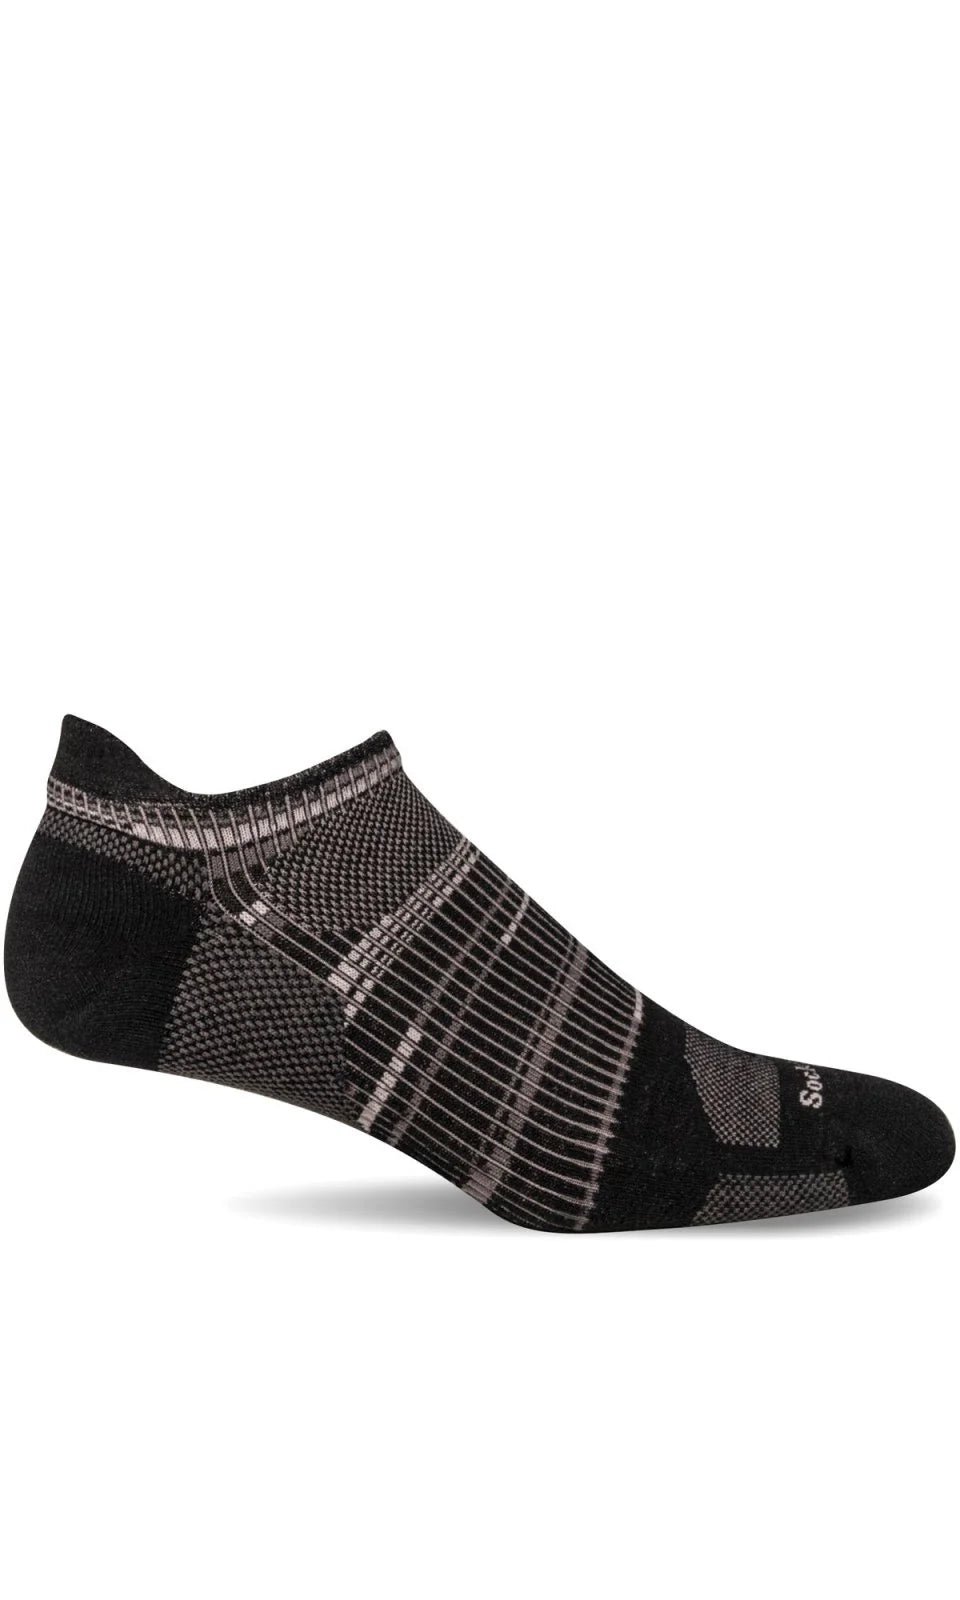 Sprint Micro Men's Bamboo/Merino Moderate Compression Ankle Socks in Black - The Sockery